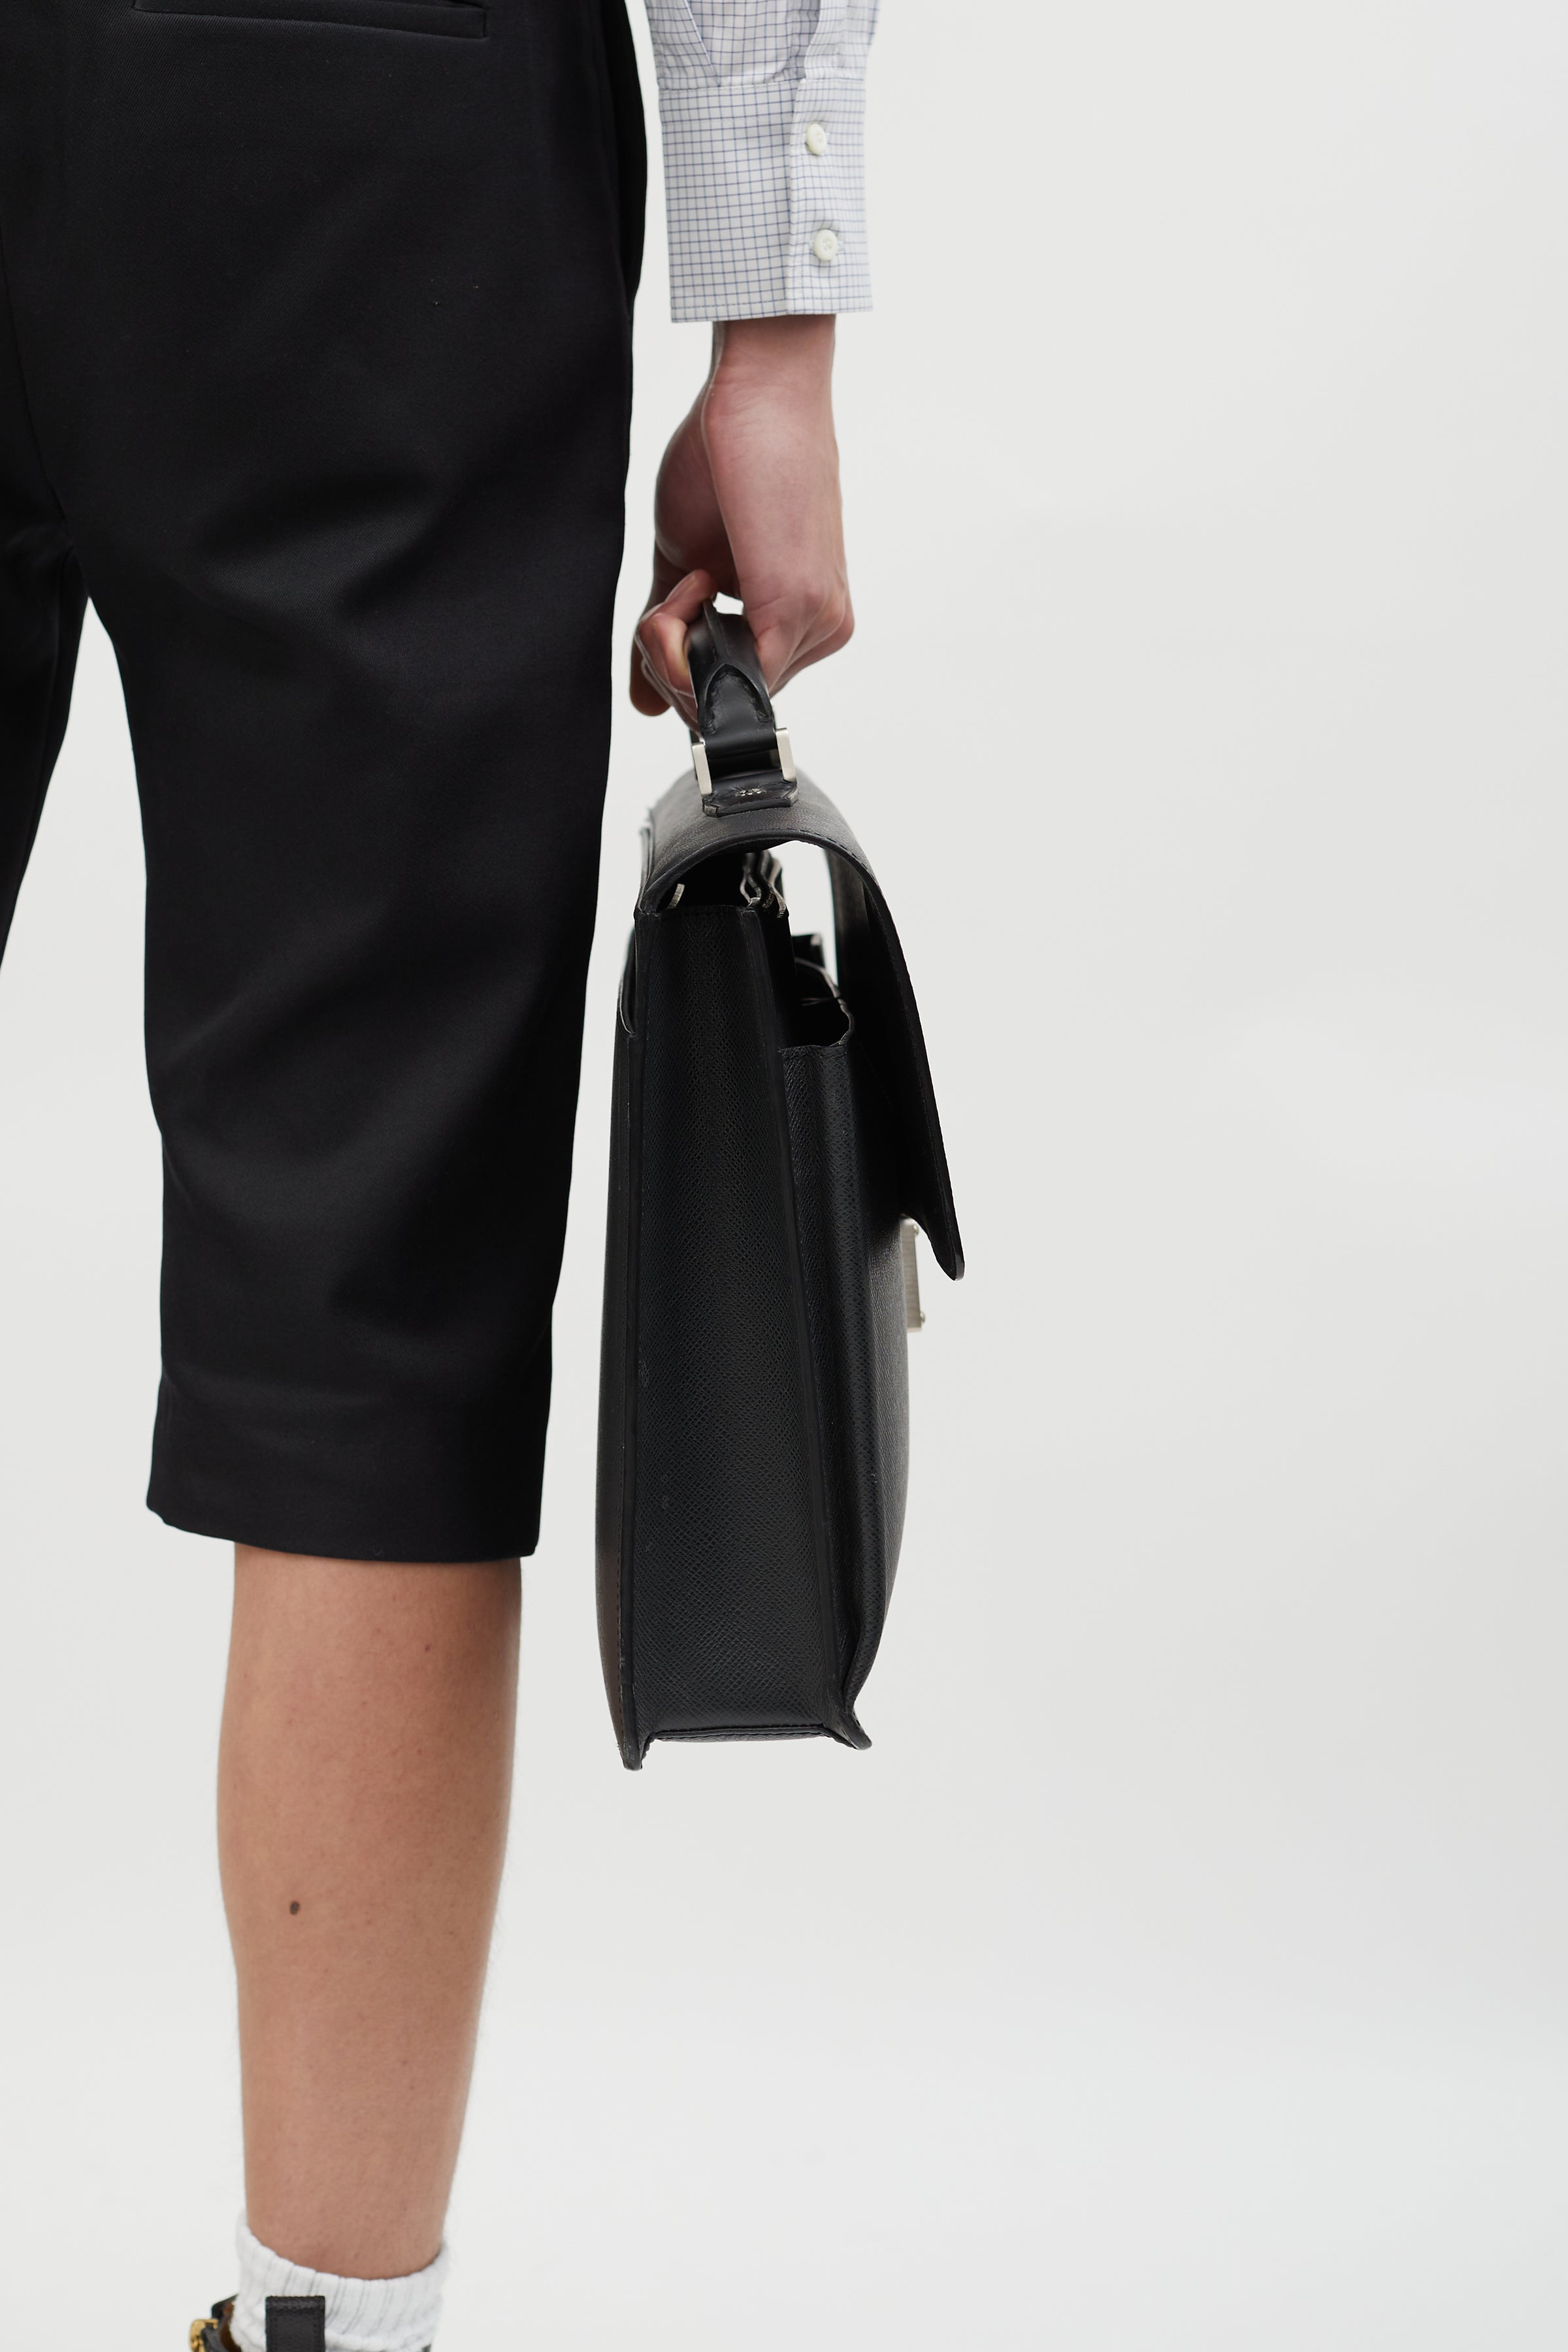 Louis Vuitton Black Briefcase 0163 2400x